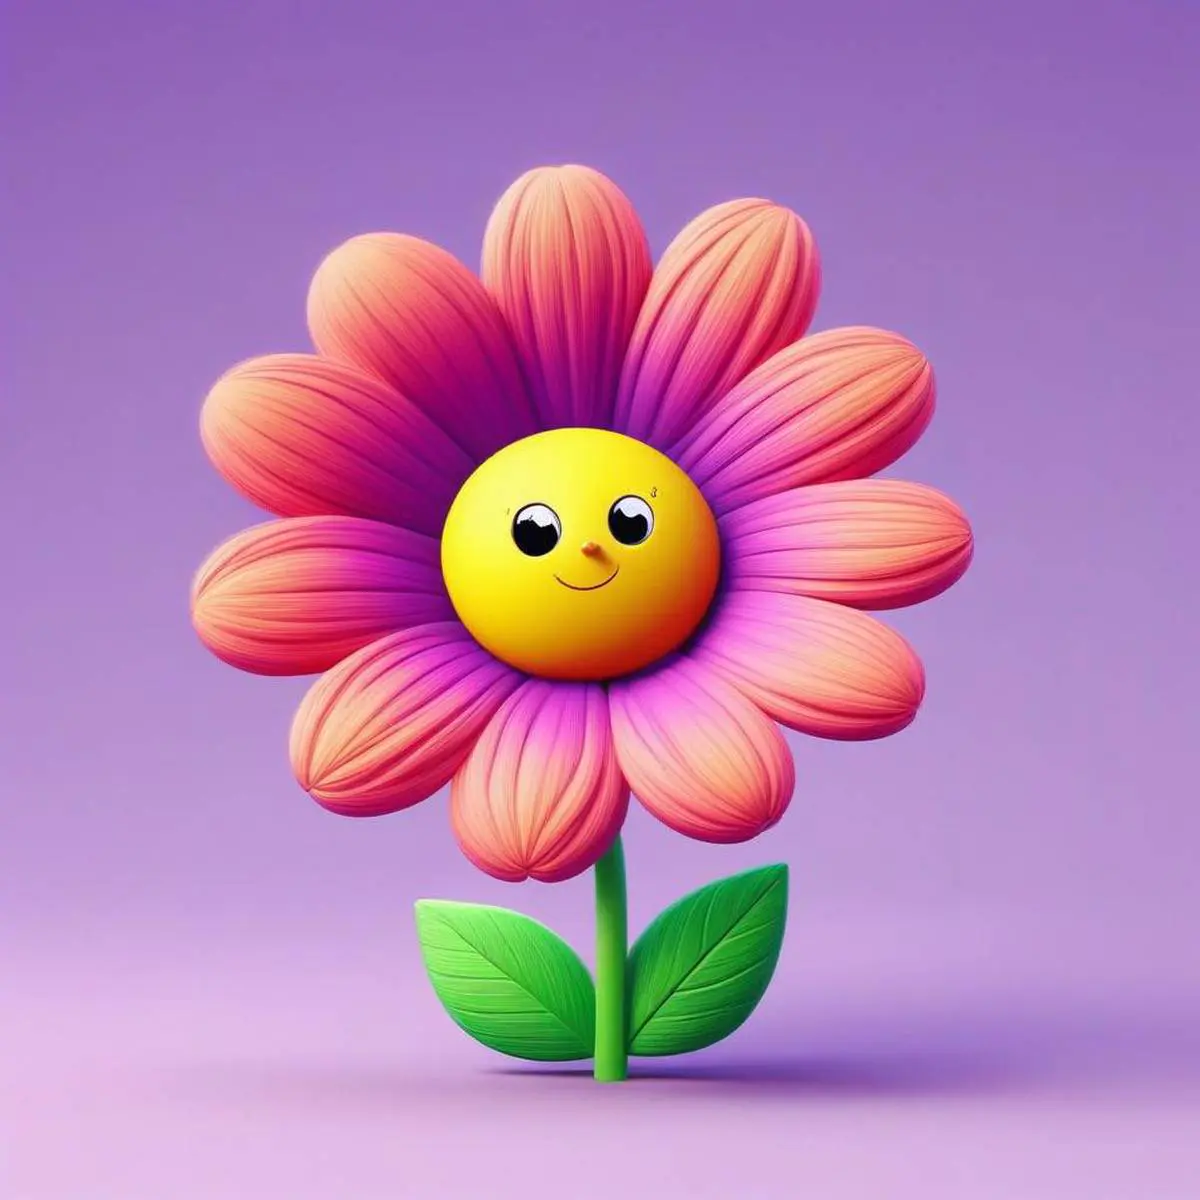 Flower puns